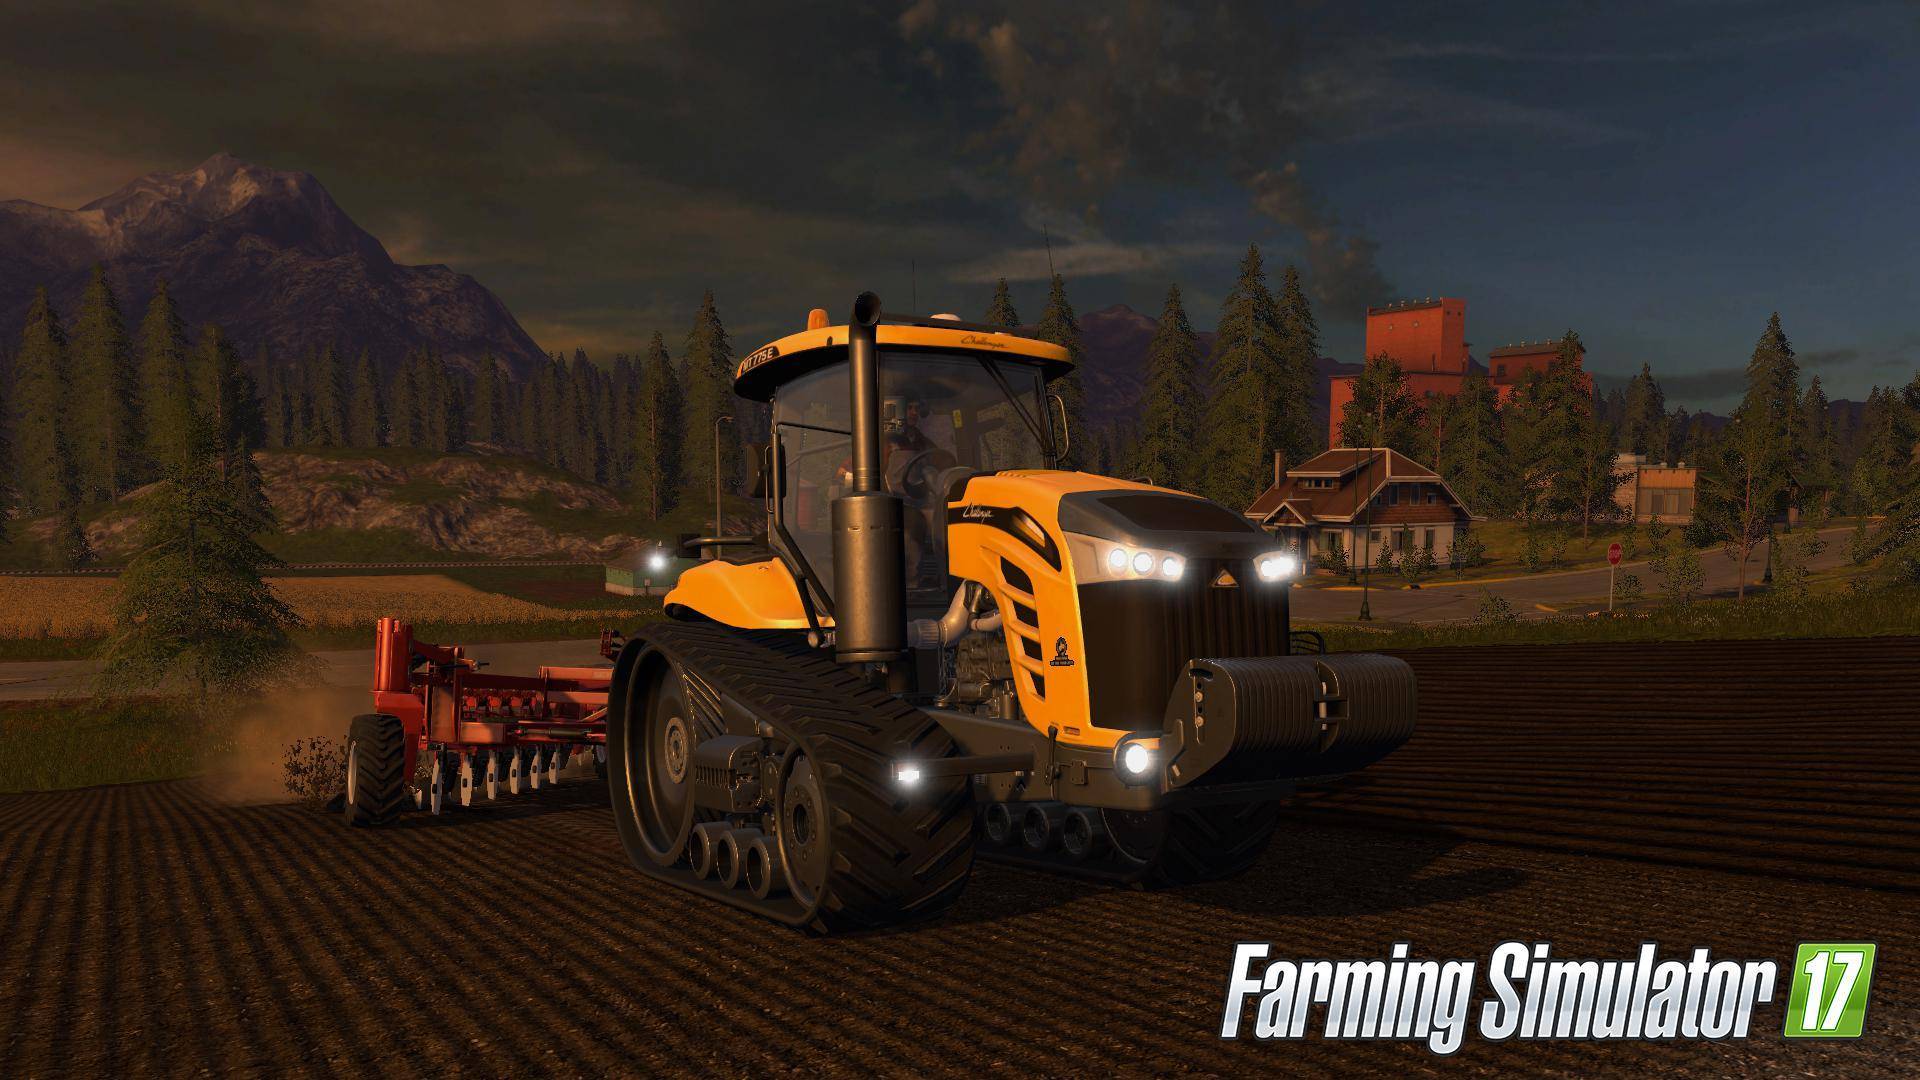 Farming Simulator 17 (PS4) cheap - Price of $7.53